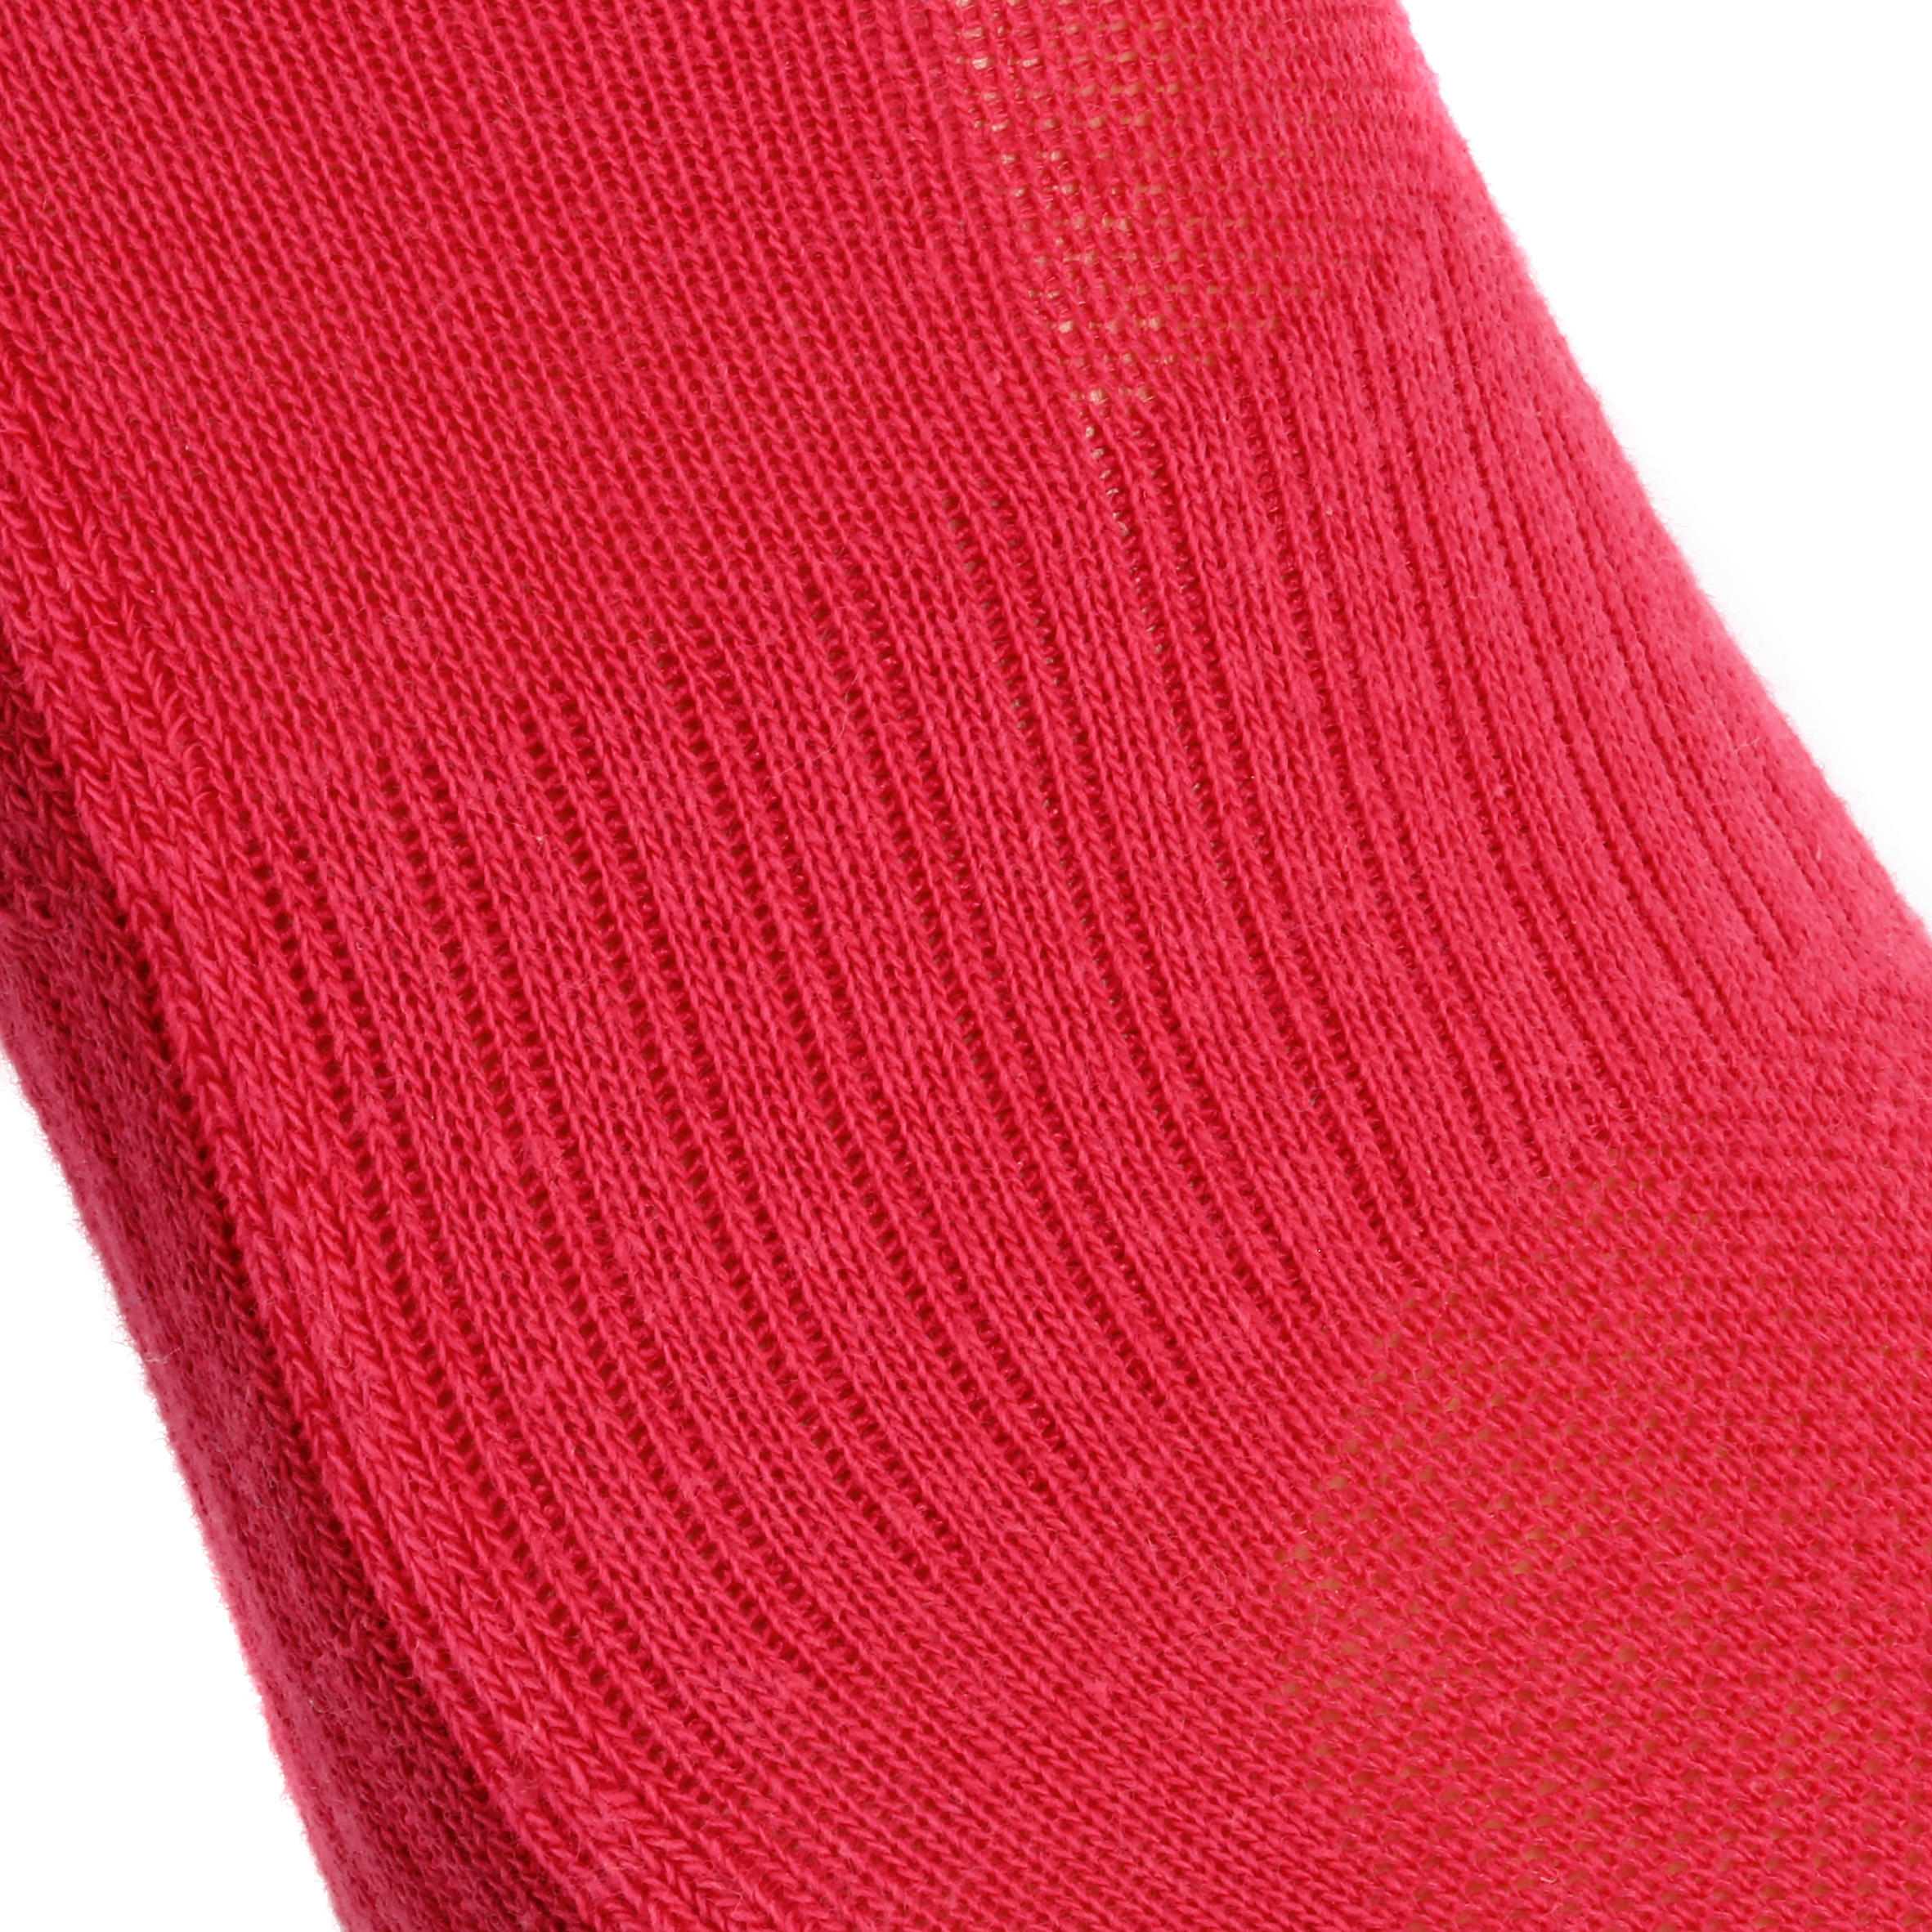 Kids’ hiking socks MH100 Pink/Grey packaged as 2 pairs 7/9